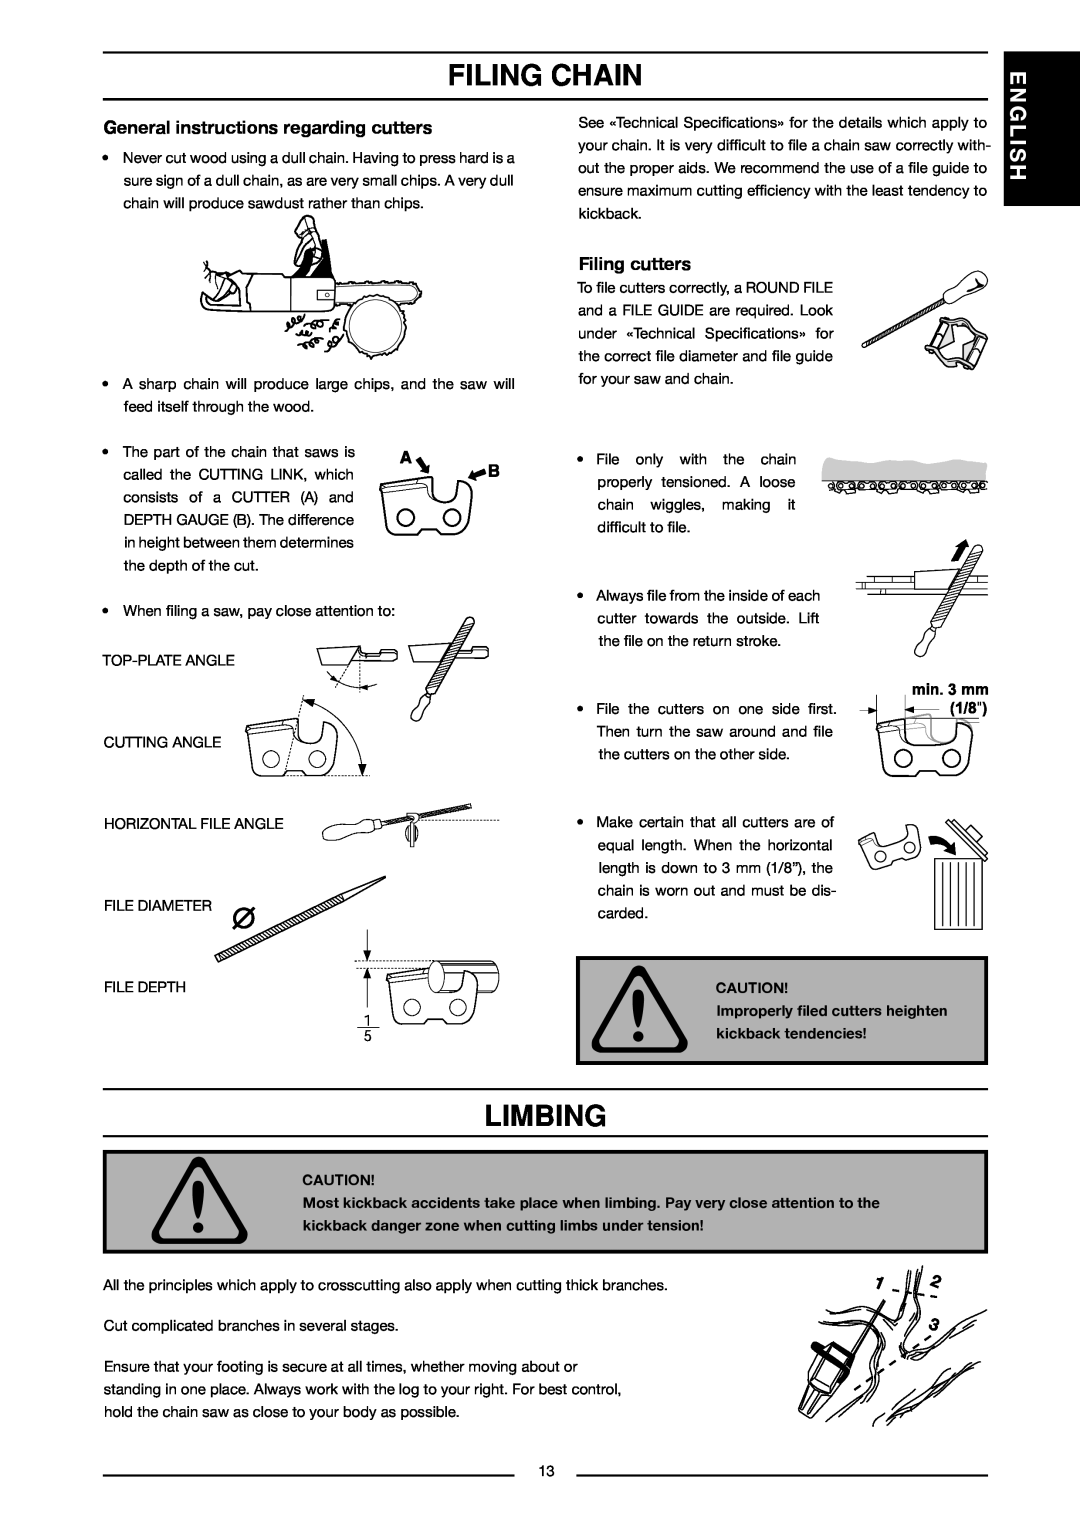 Jonsered CS 2117 EL, CS 2121 EL Filing Chain, Limbing, English, General instructions regarding cutters, Filing cutters 